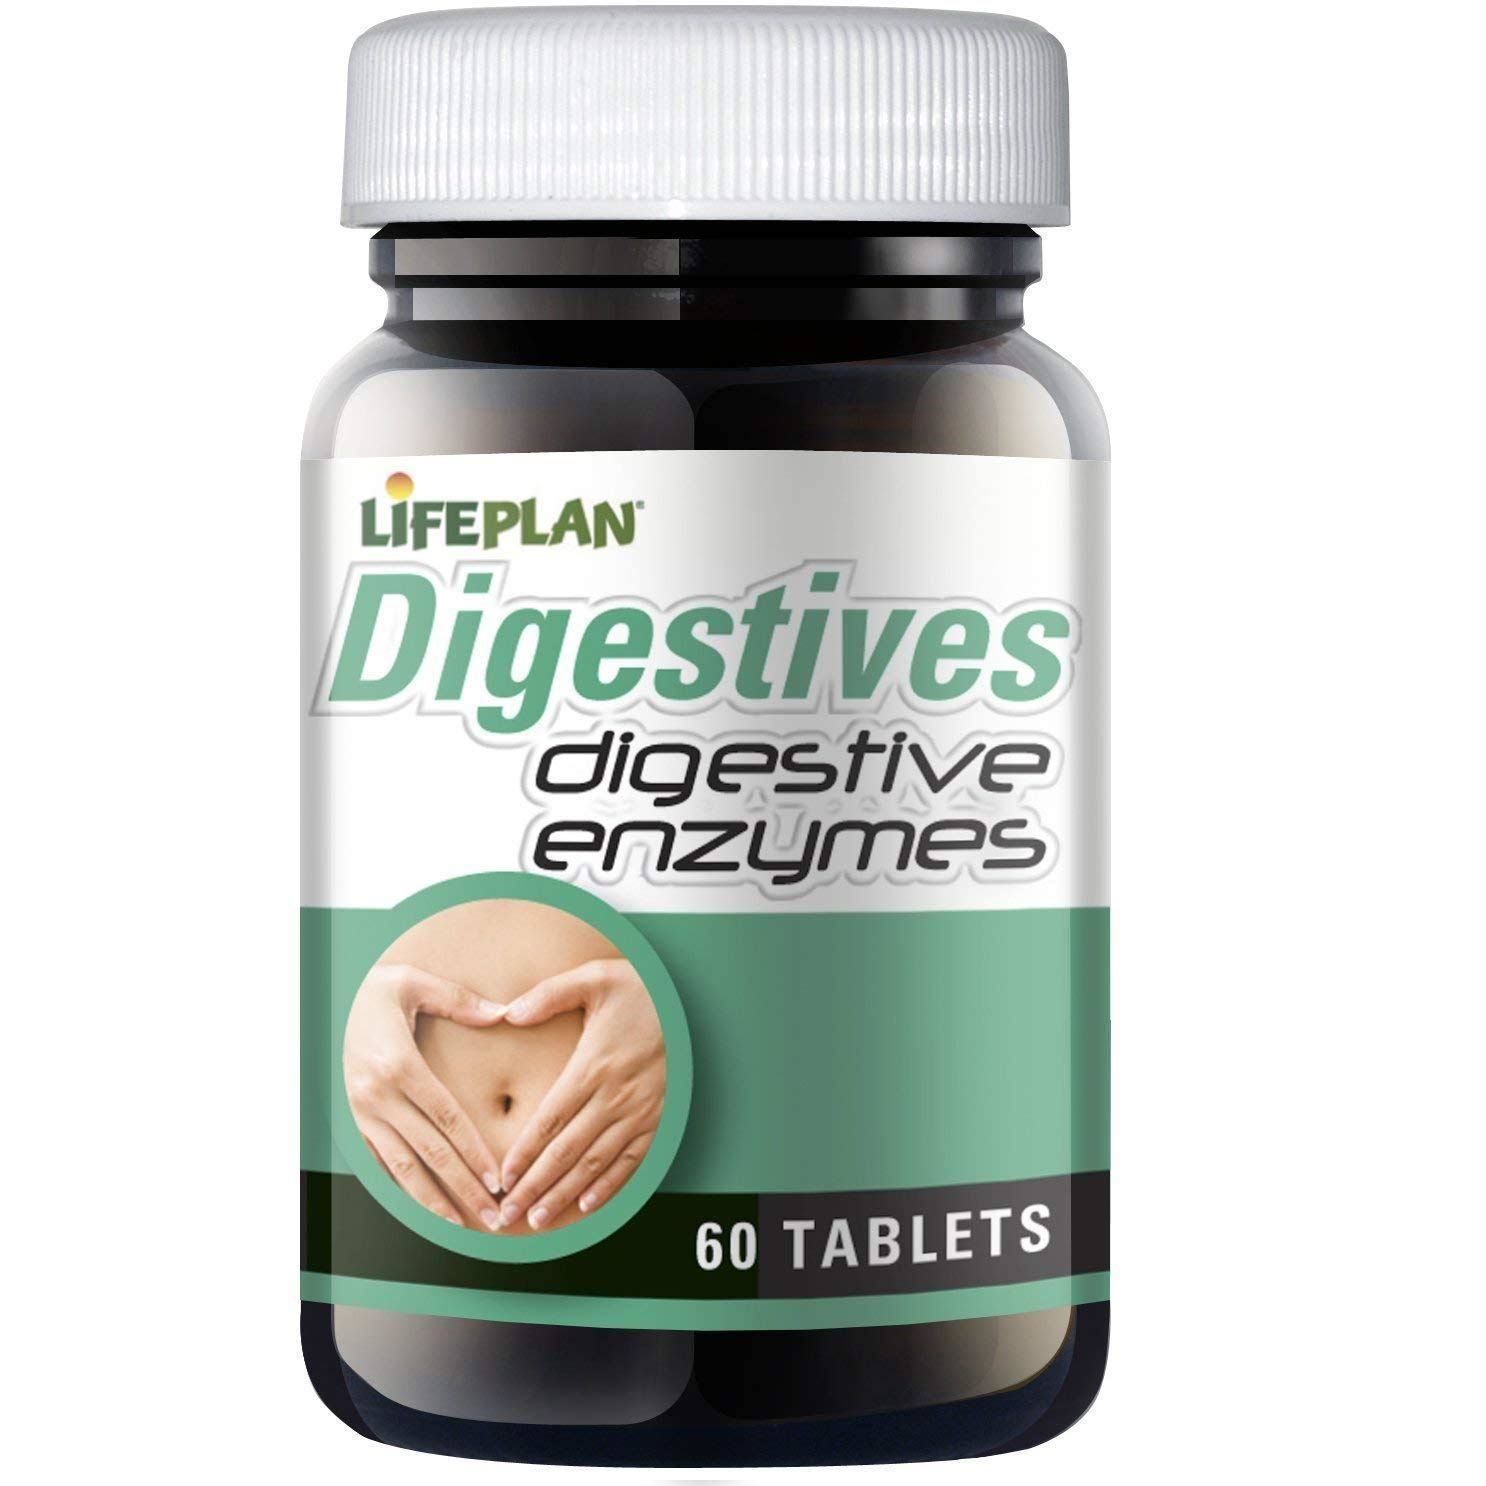 Lifeplan Digestive Enzymes - 60 Tablets